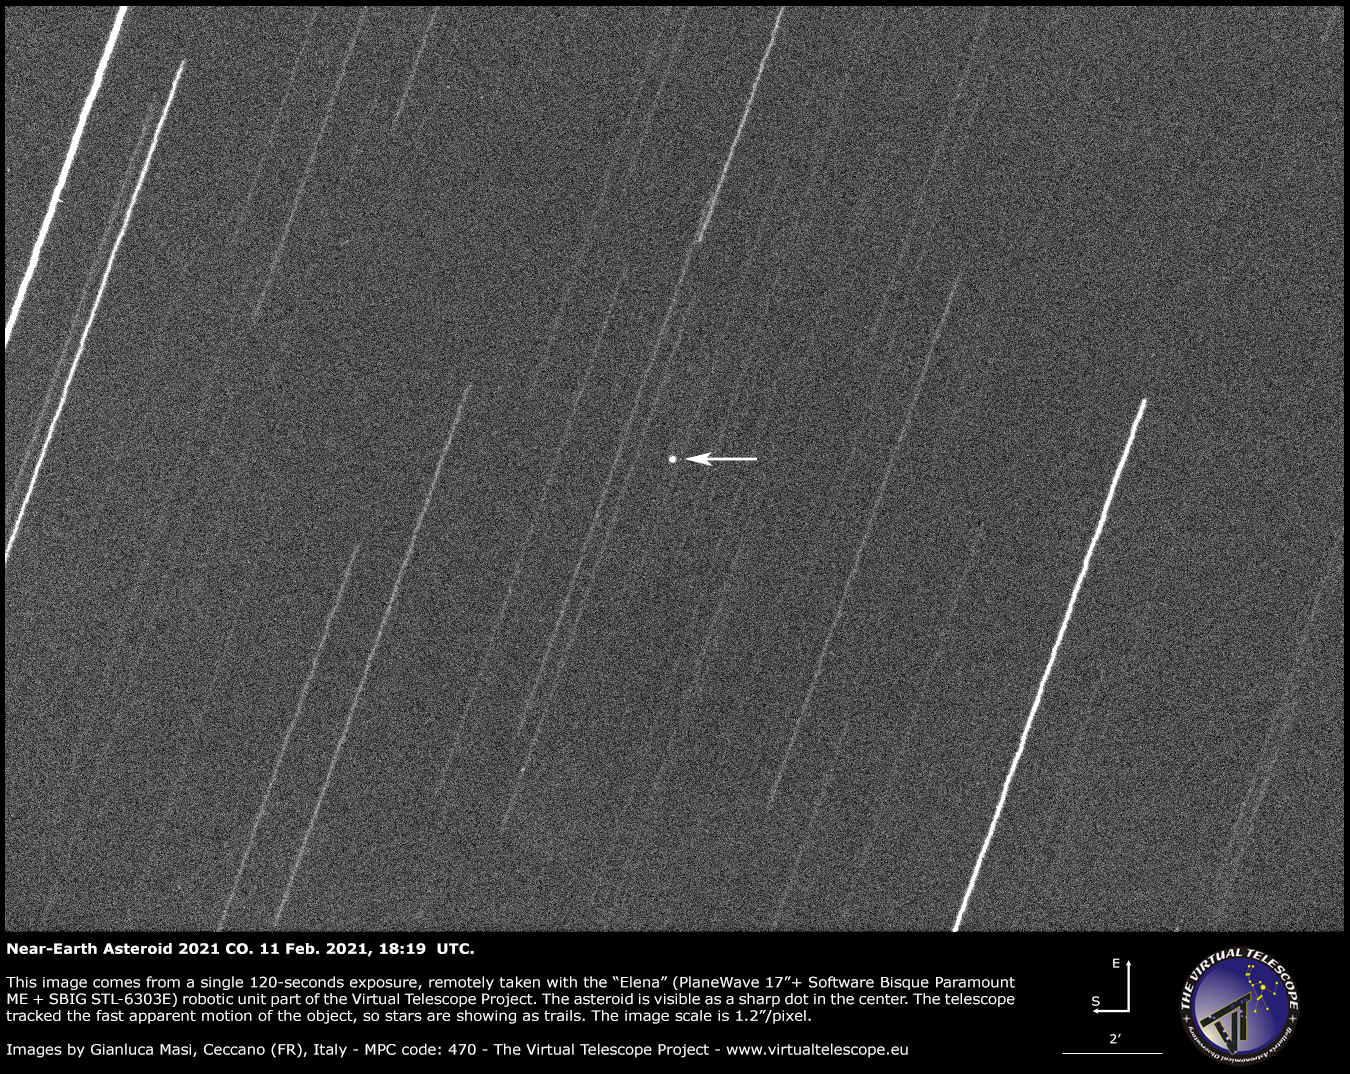 Near-Earth asteroid 2021 CO. 12 Feb. 2021.